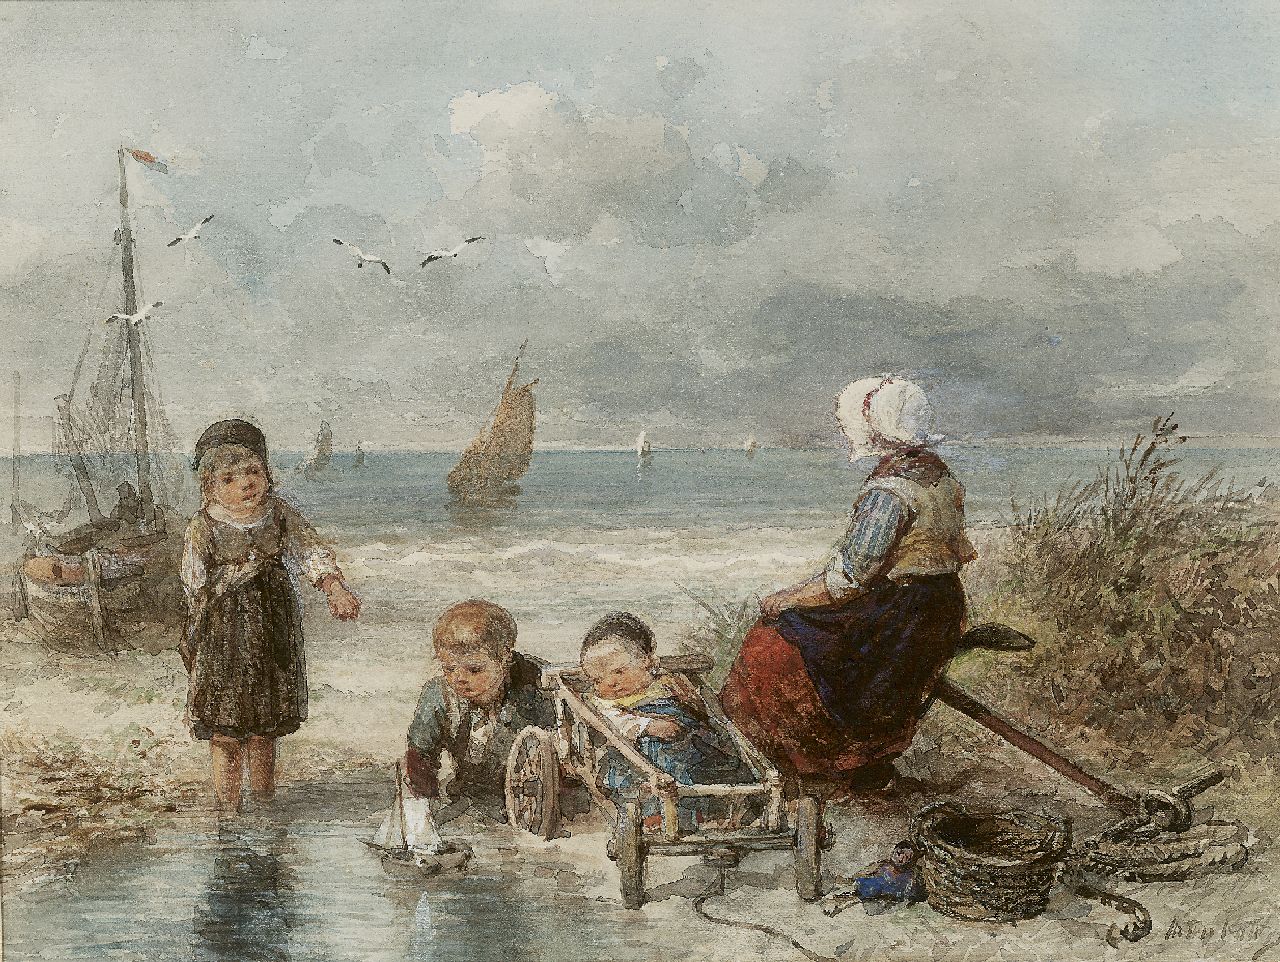 Kate J.M.H. ten | Johan 'Mari' Henri ten Kate, Fisherman's wife and her children on the beach, Aquarell auf Papier 20,6 x 28,3 cm, signed l.r.